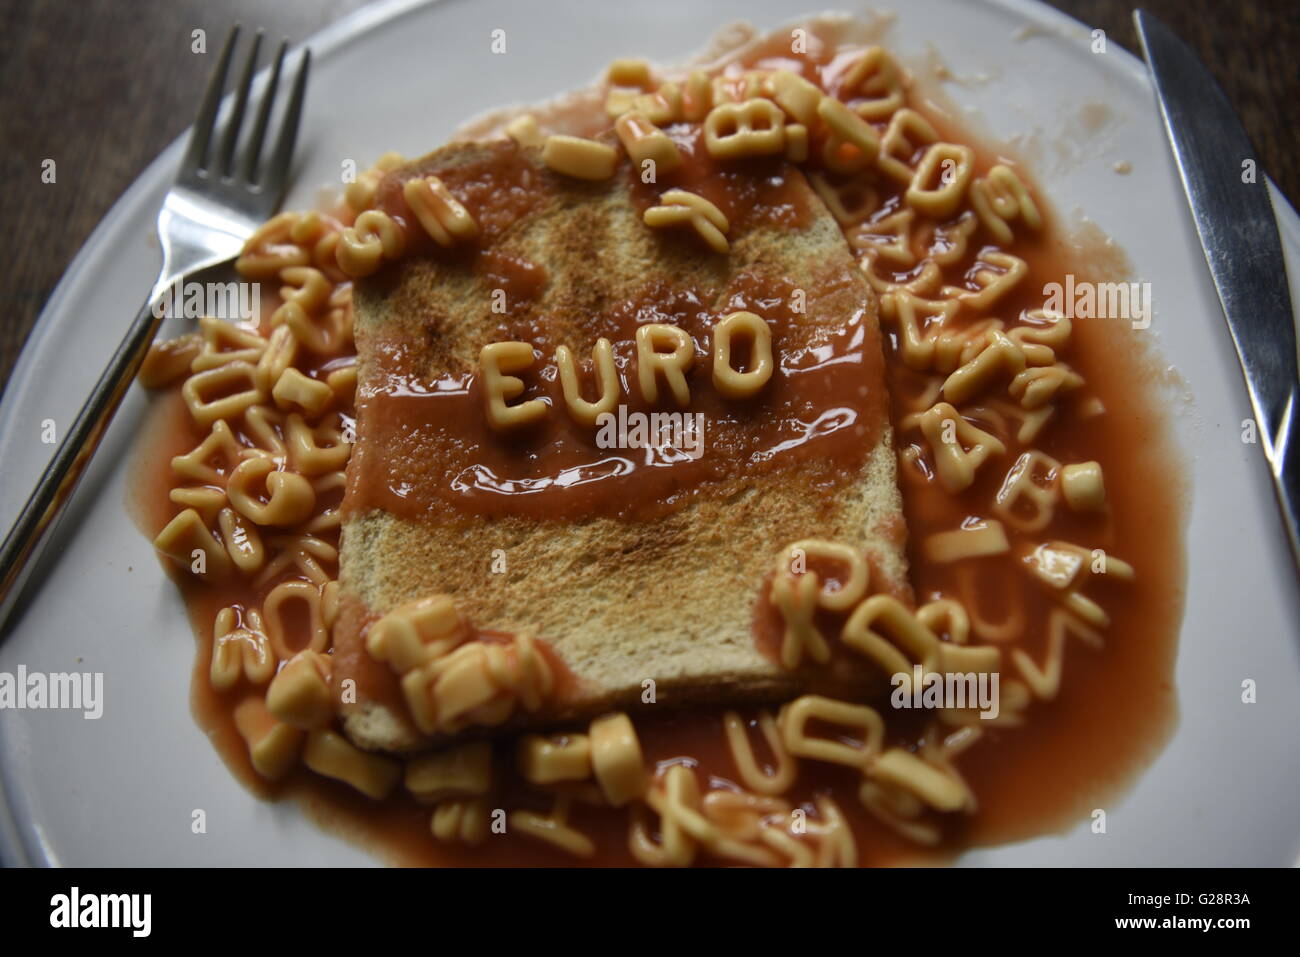 EU Referendum concept image in kids alphabet pasta on toast Stock Photo